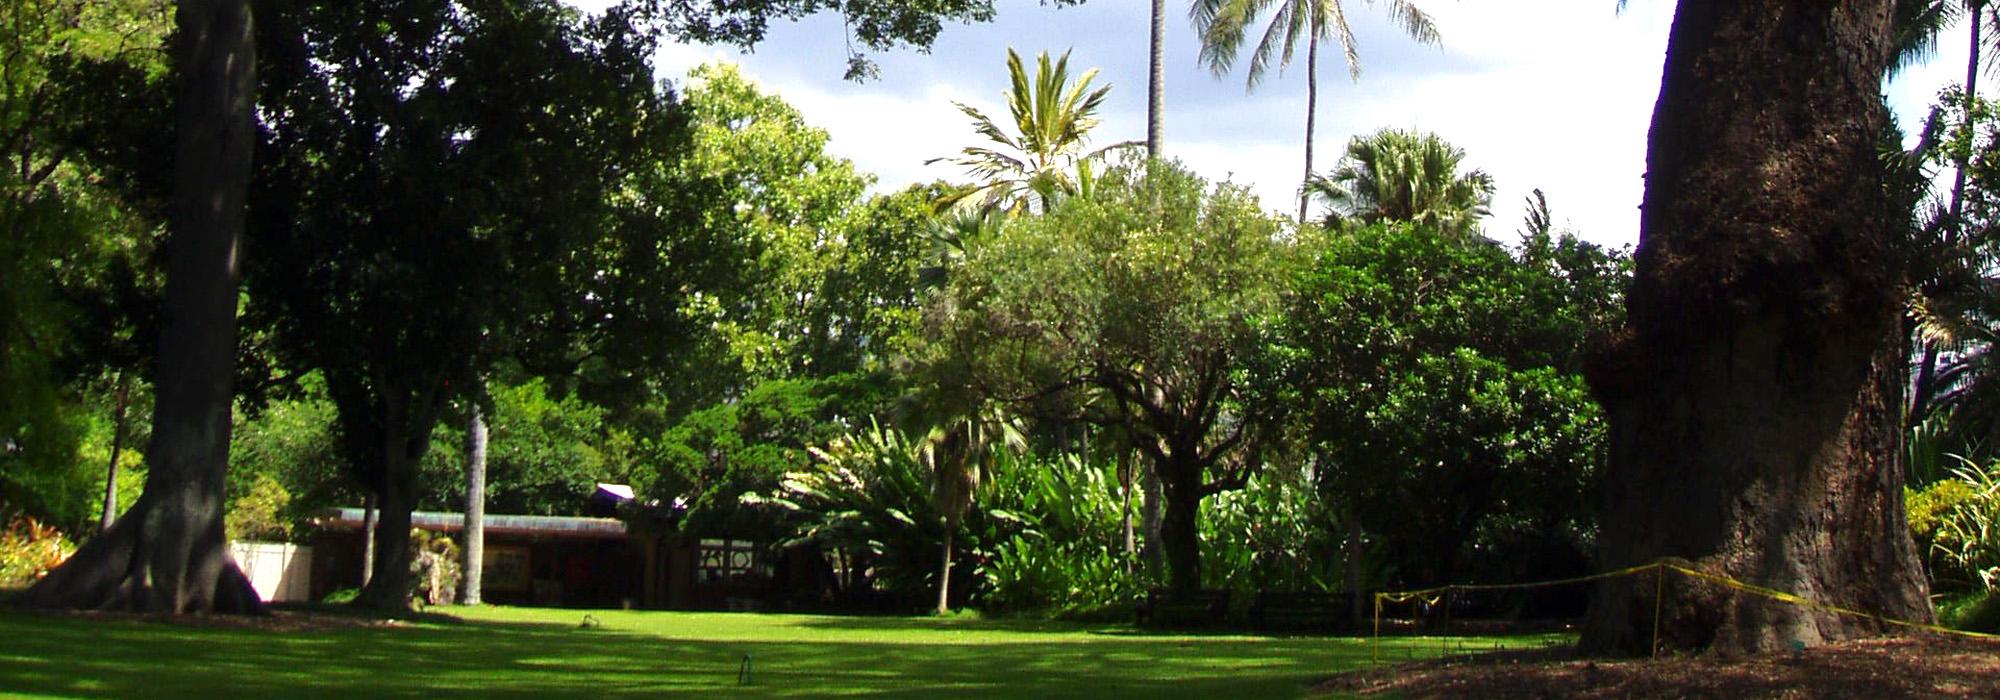 Foster Botanical Garden, Honolulu, HI